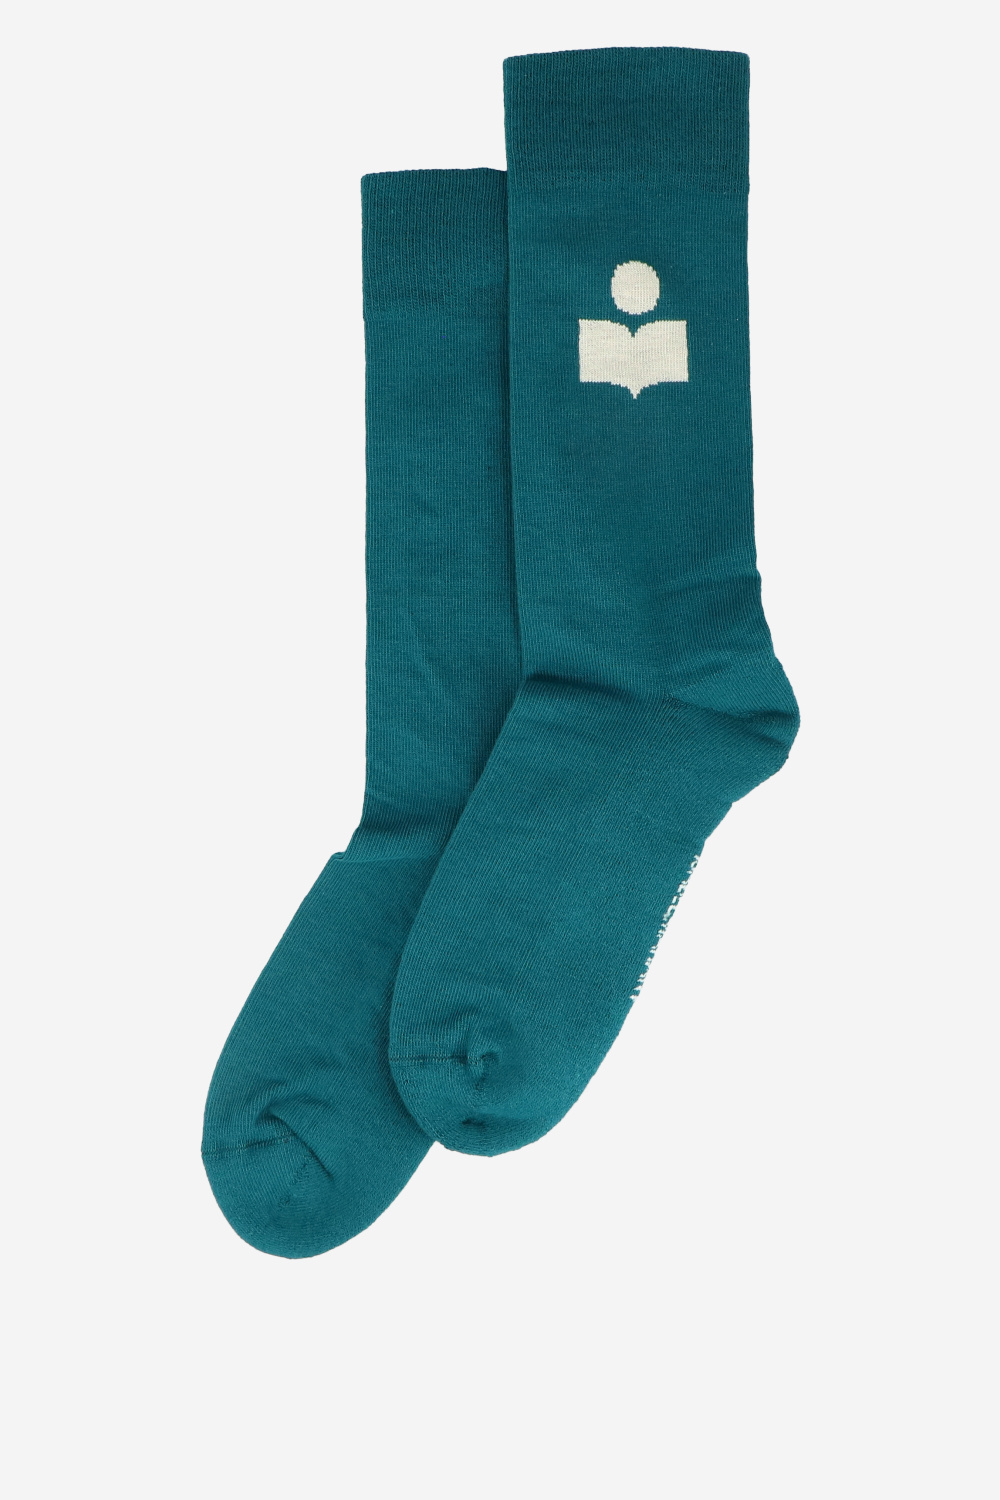 Isabel Marant Socks Blue